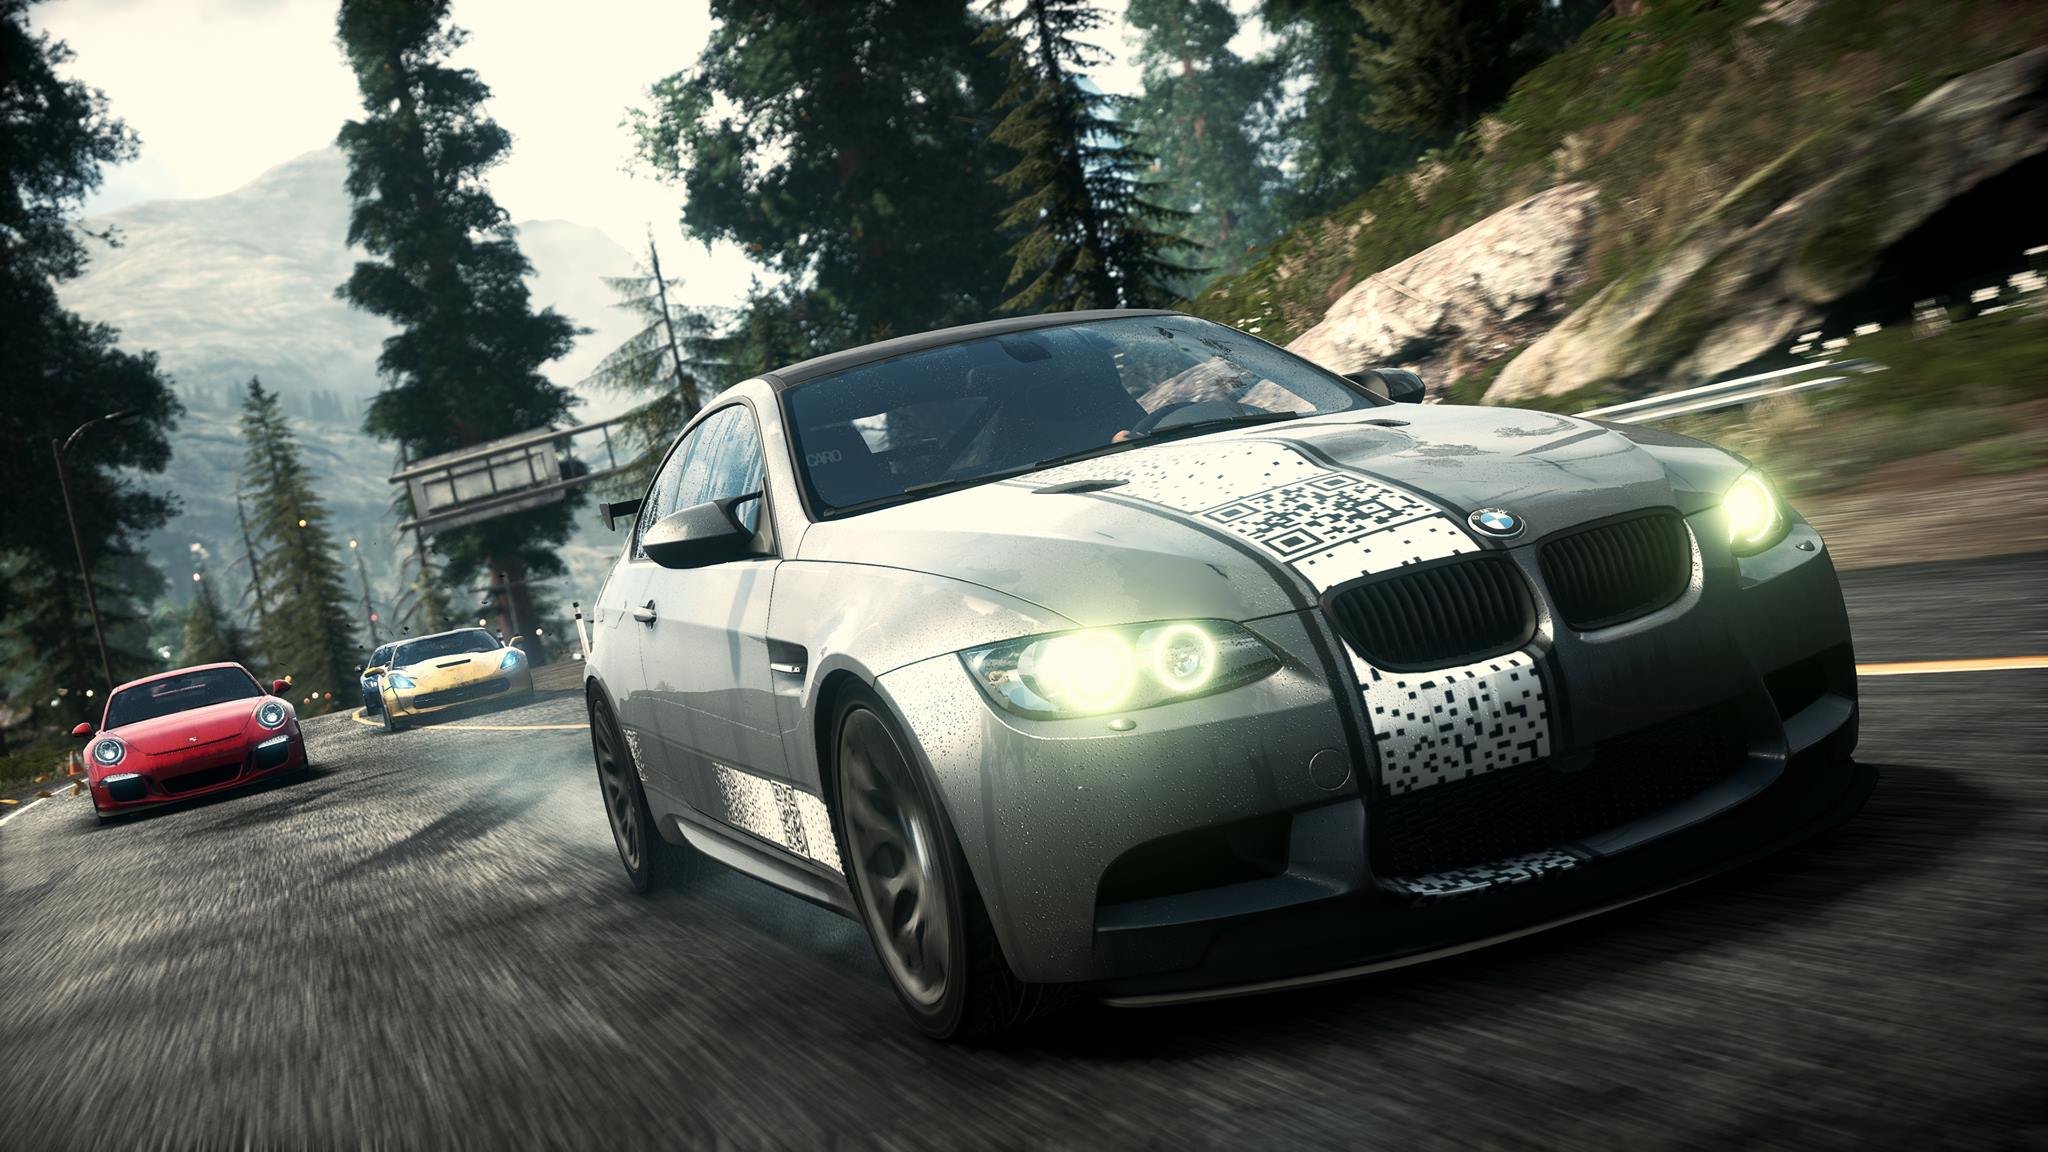 Нидфорспид. Need for Speed Rivals Xbox 360. Need for Speed Rivals BMW m3 GTR. Игра NFS Rivals. Need for Speed Rivals 2013.